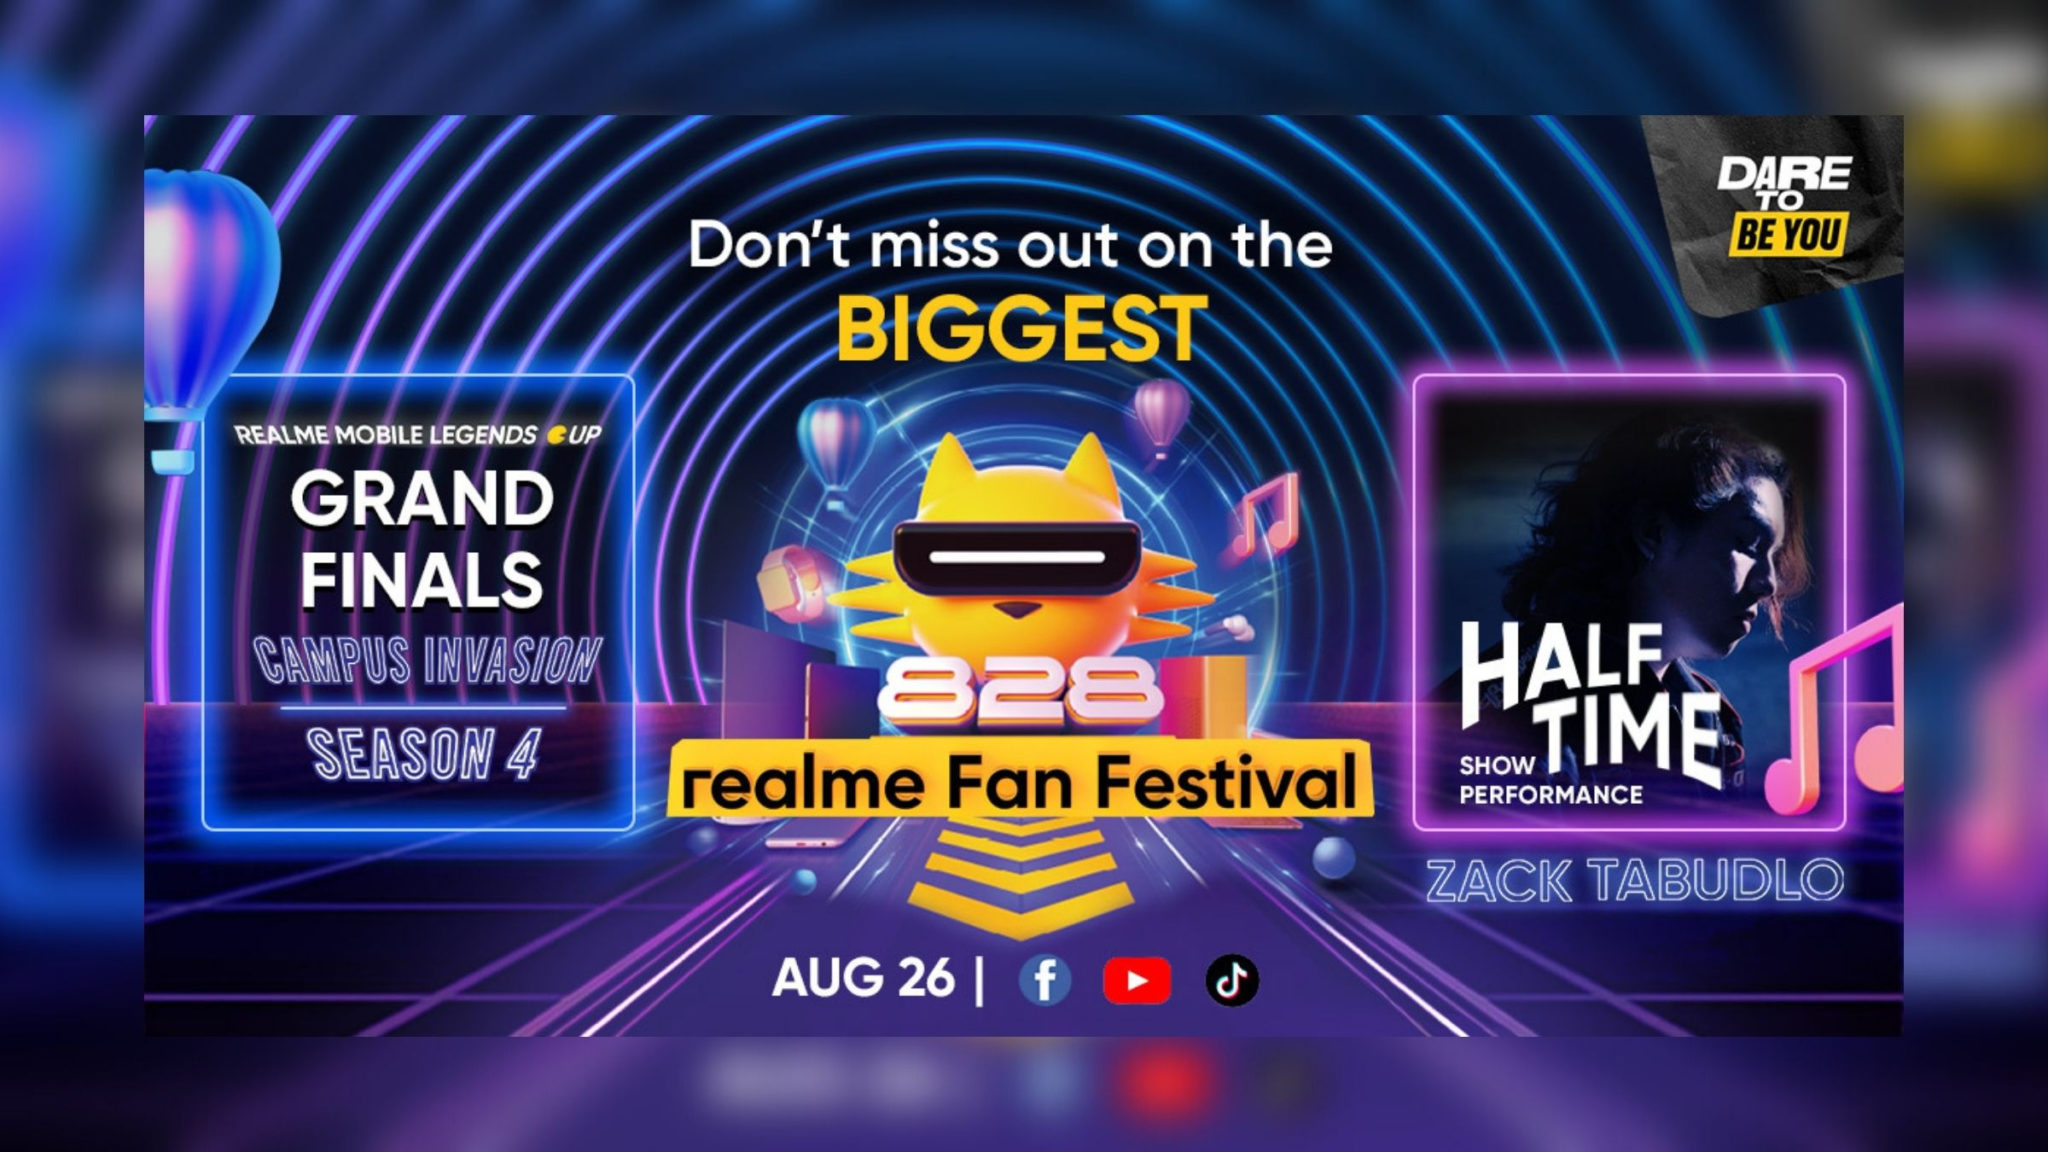 realme Fan Festival 2021 Header